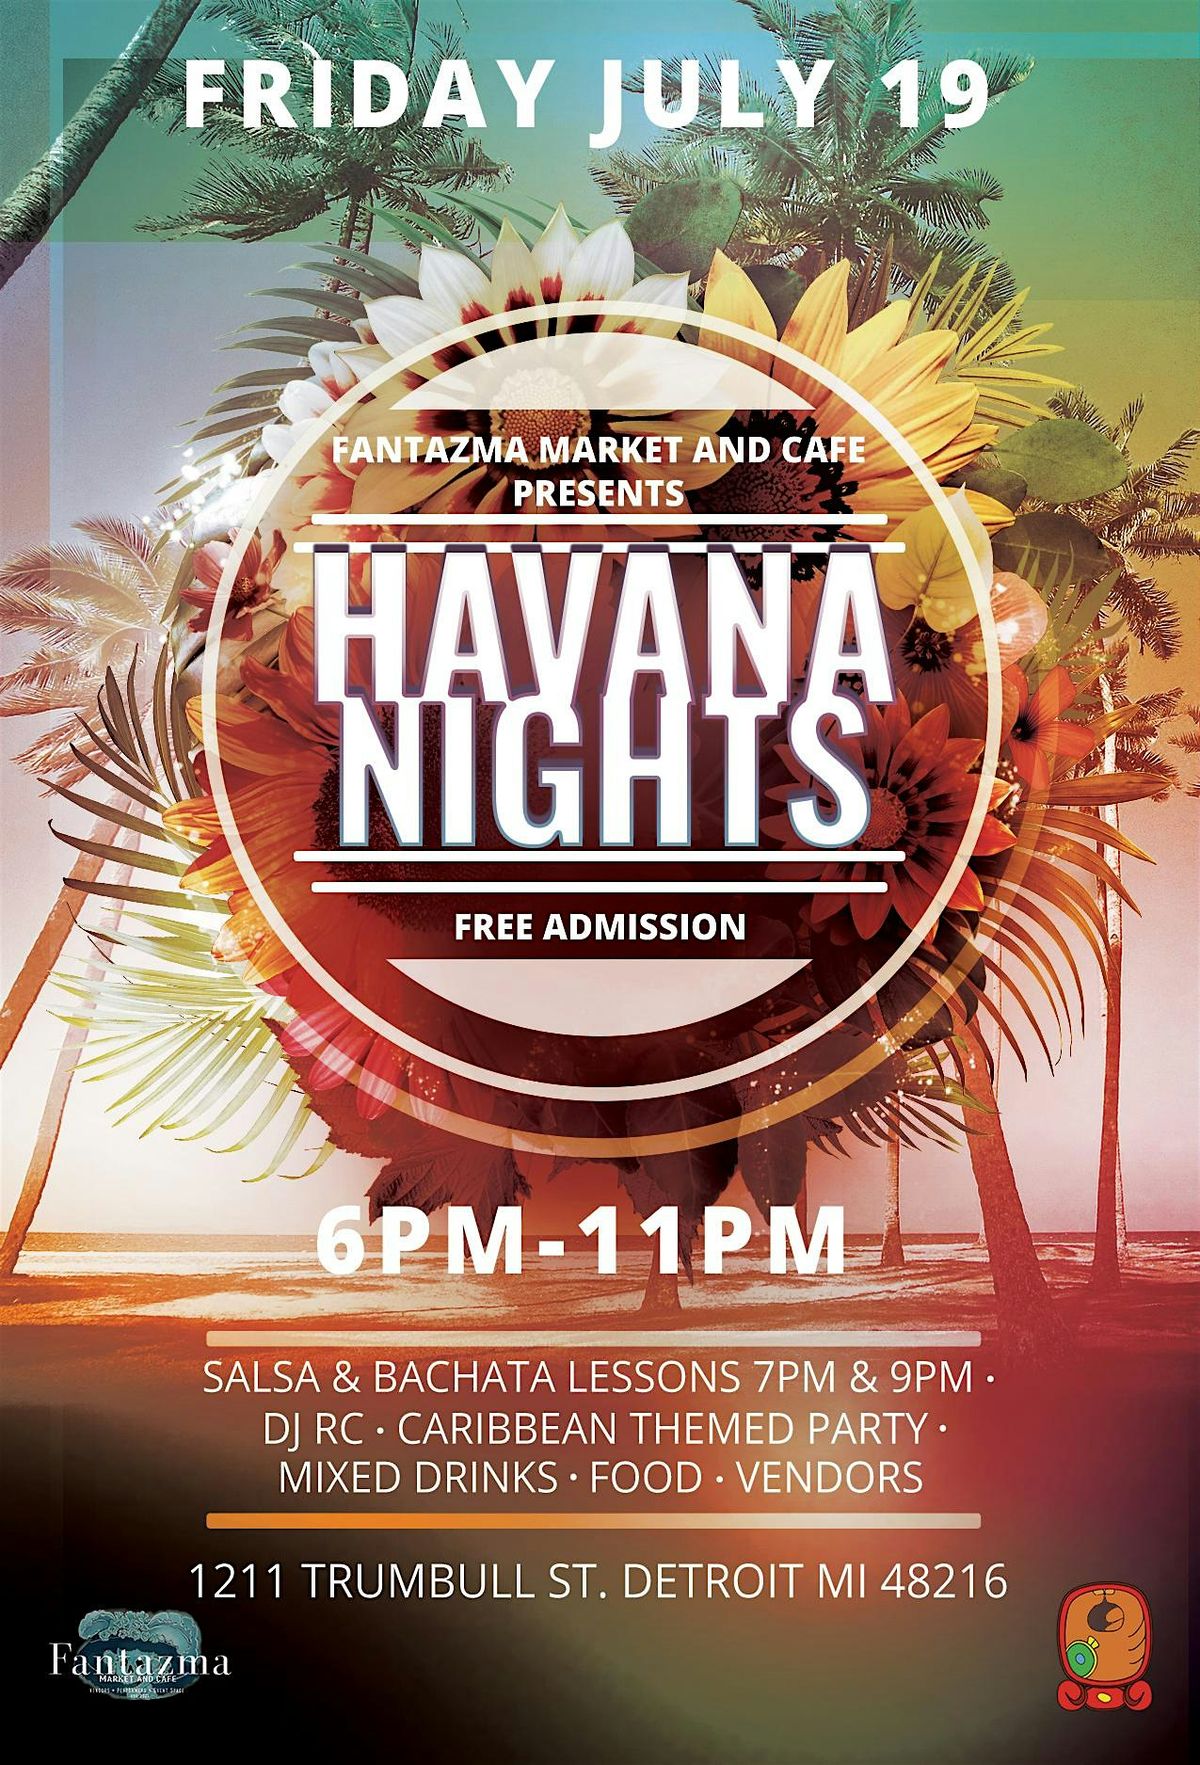 Fantazma Market & Cafe presents Havana Nights